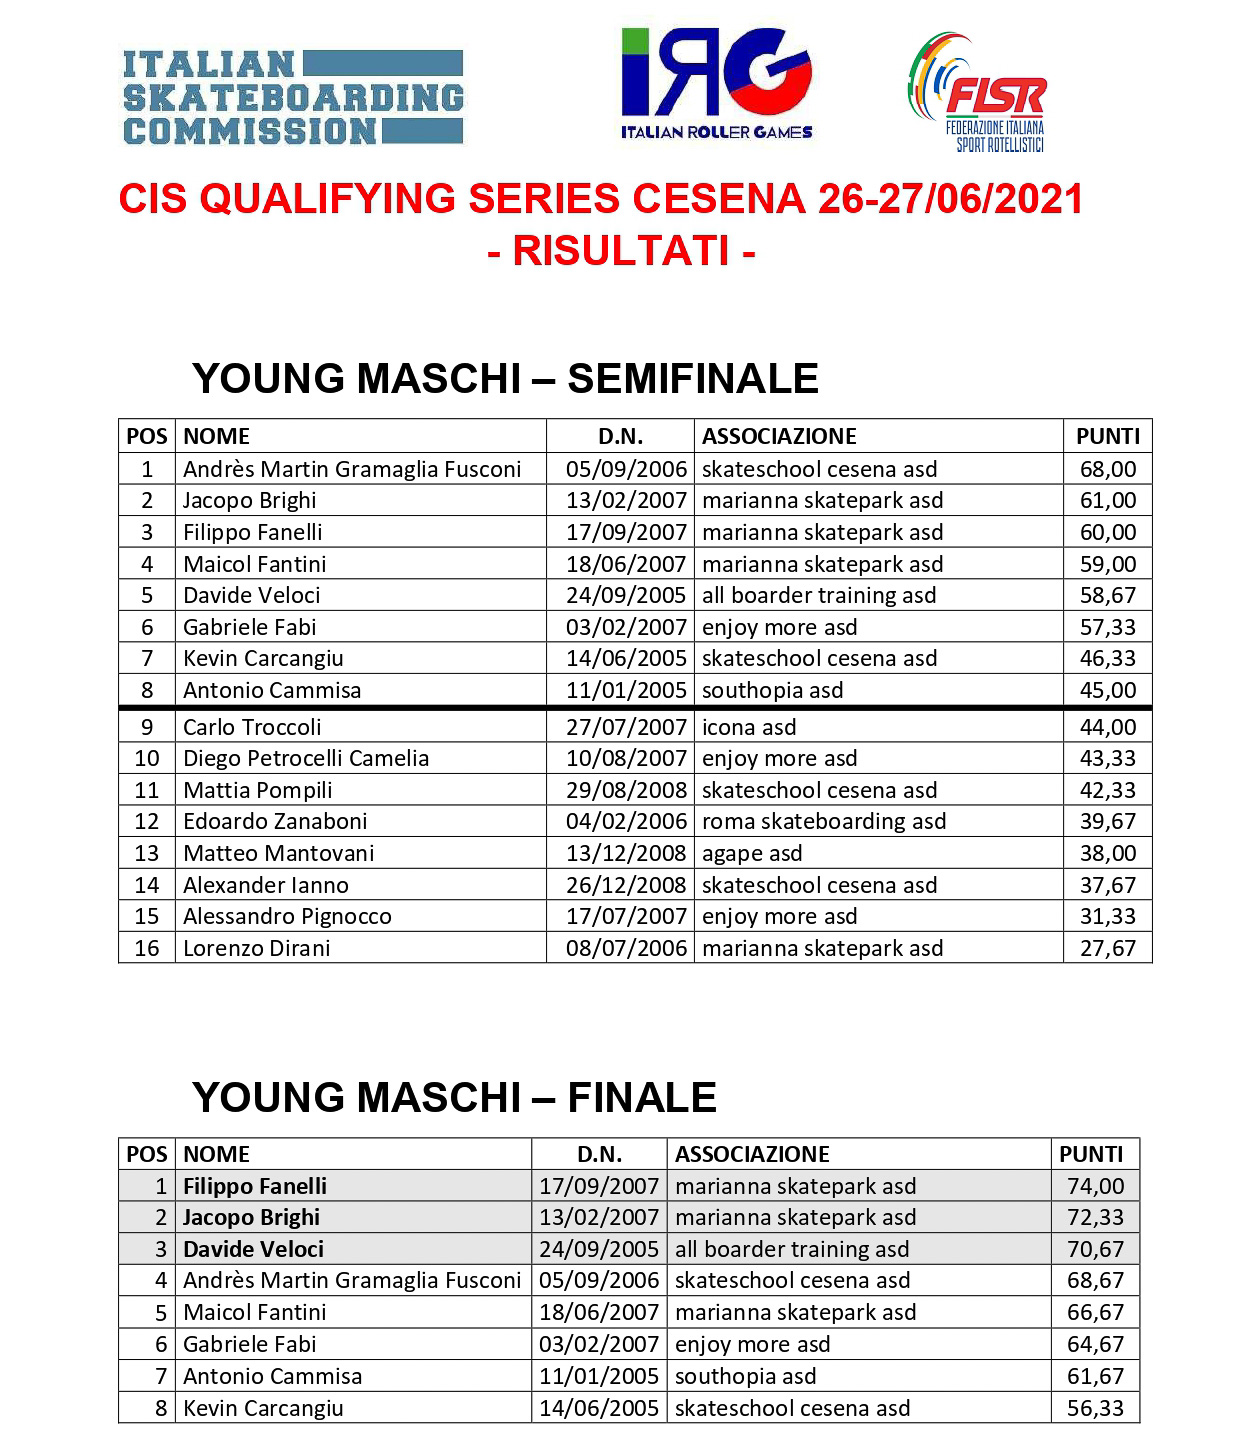 Classifiche Qualifying Series Cesena - Young Maschi Finali